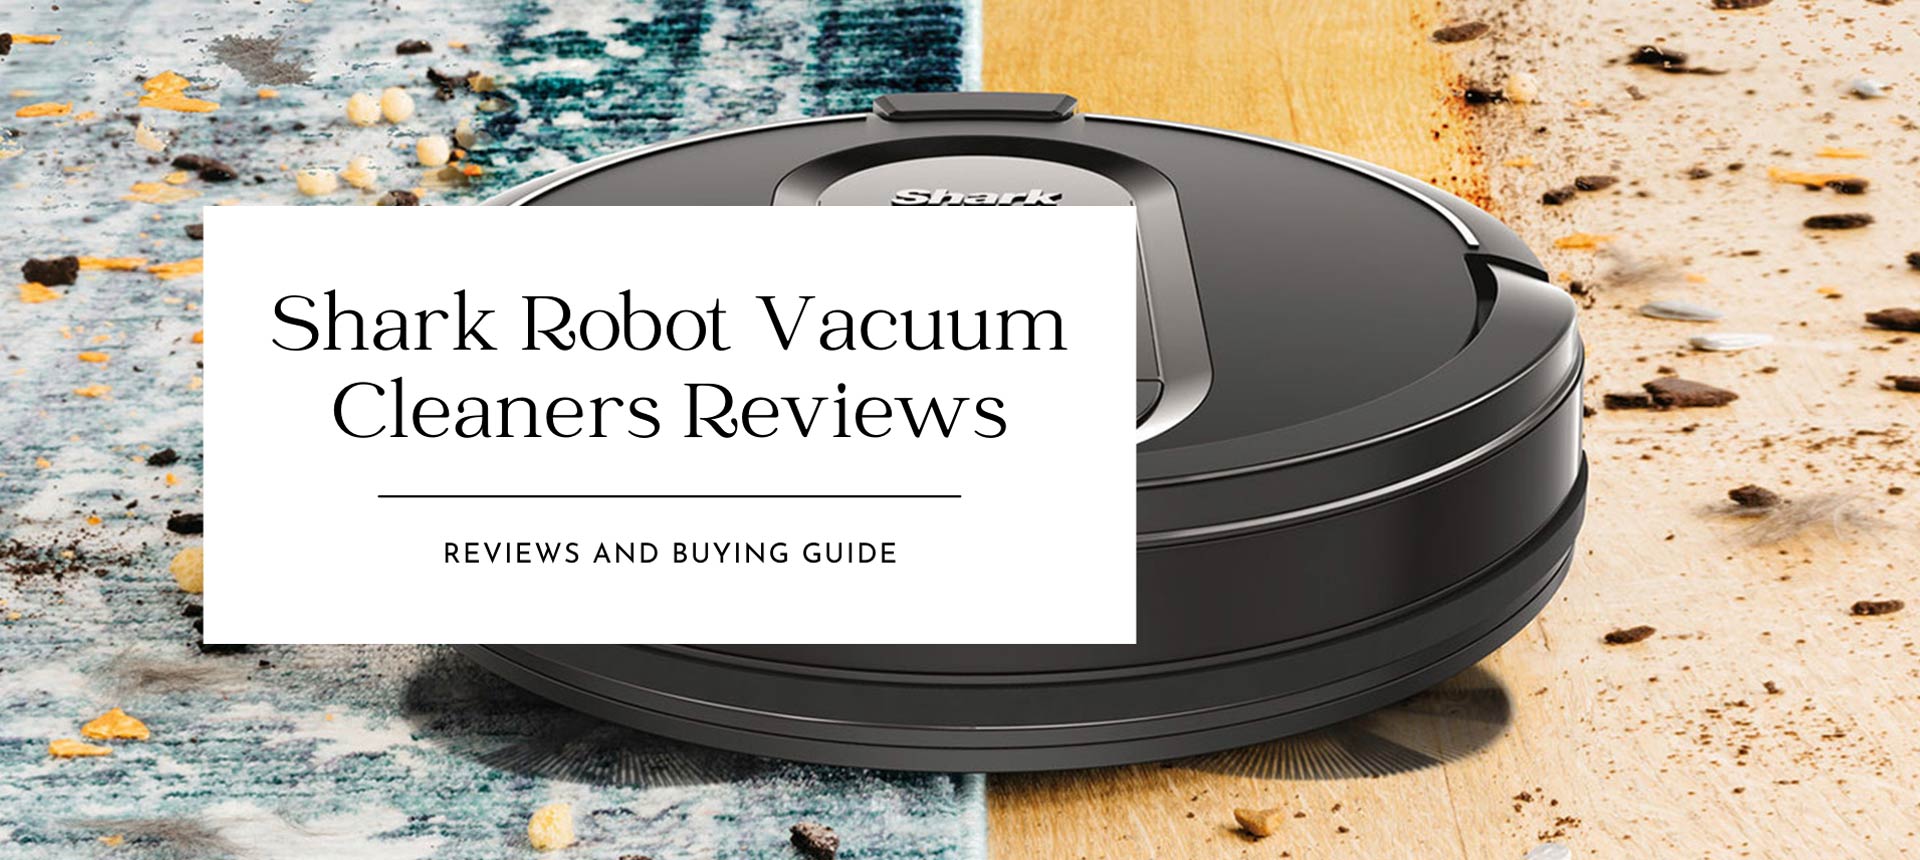 Shark Robot Vacuum Cleaners Reviews 2021